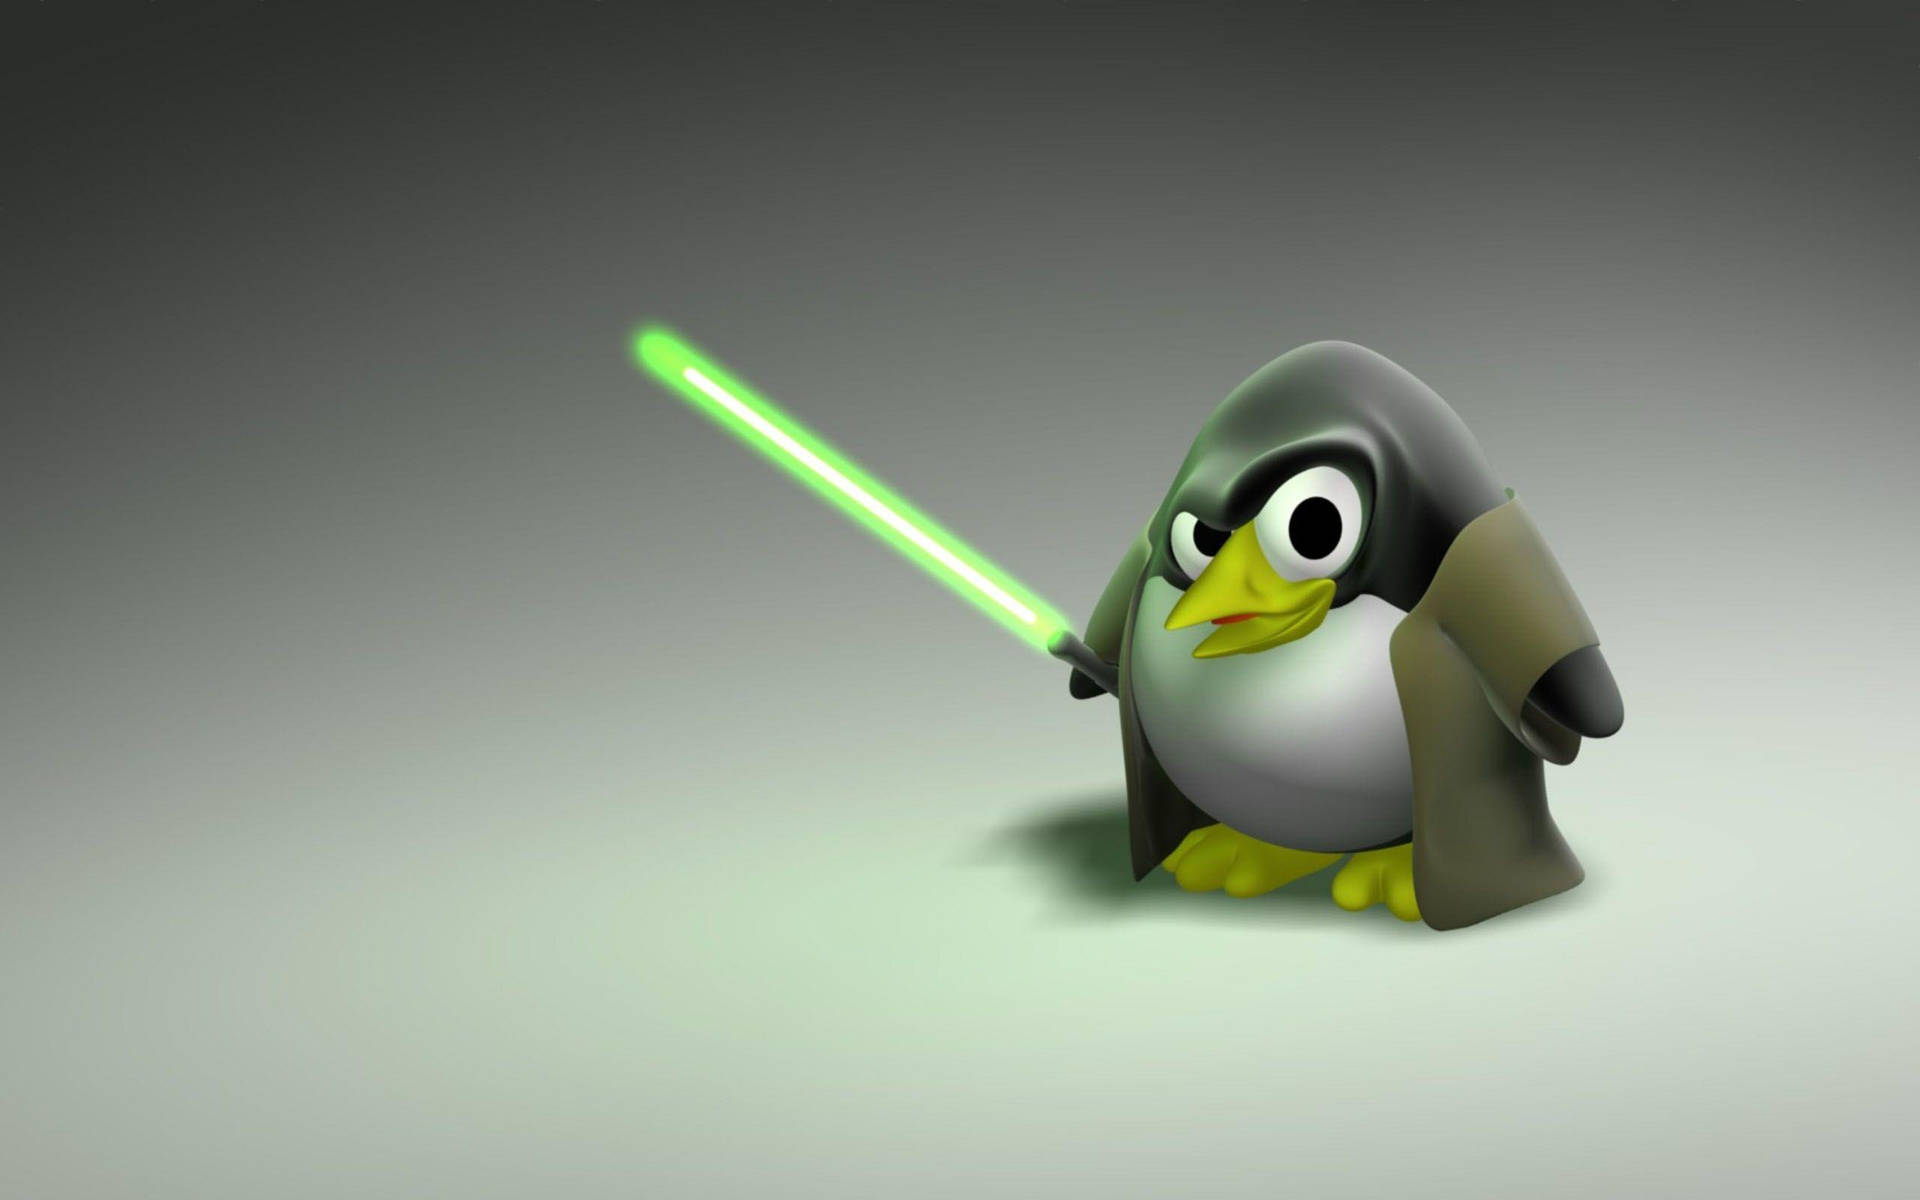 Star Wars Theme Tux Official Linux Desktop Background